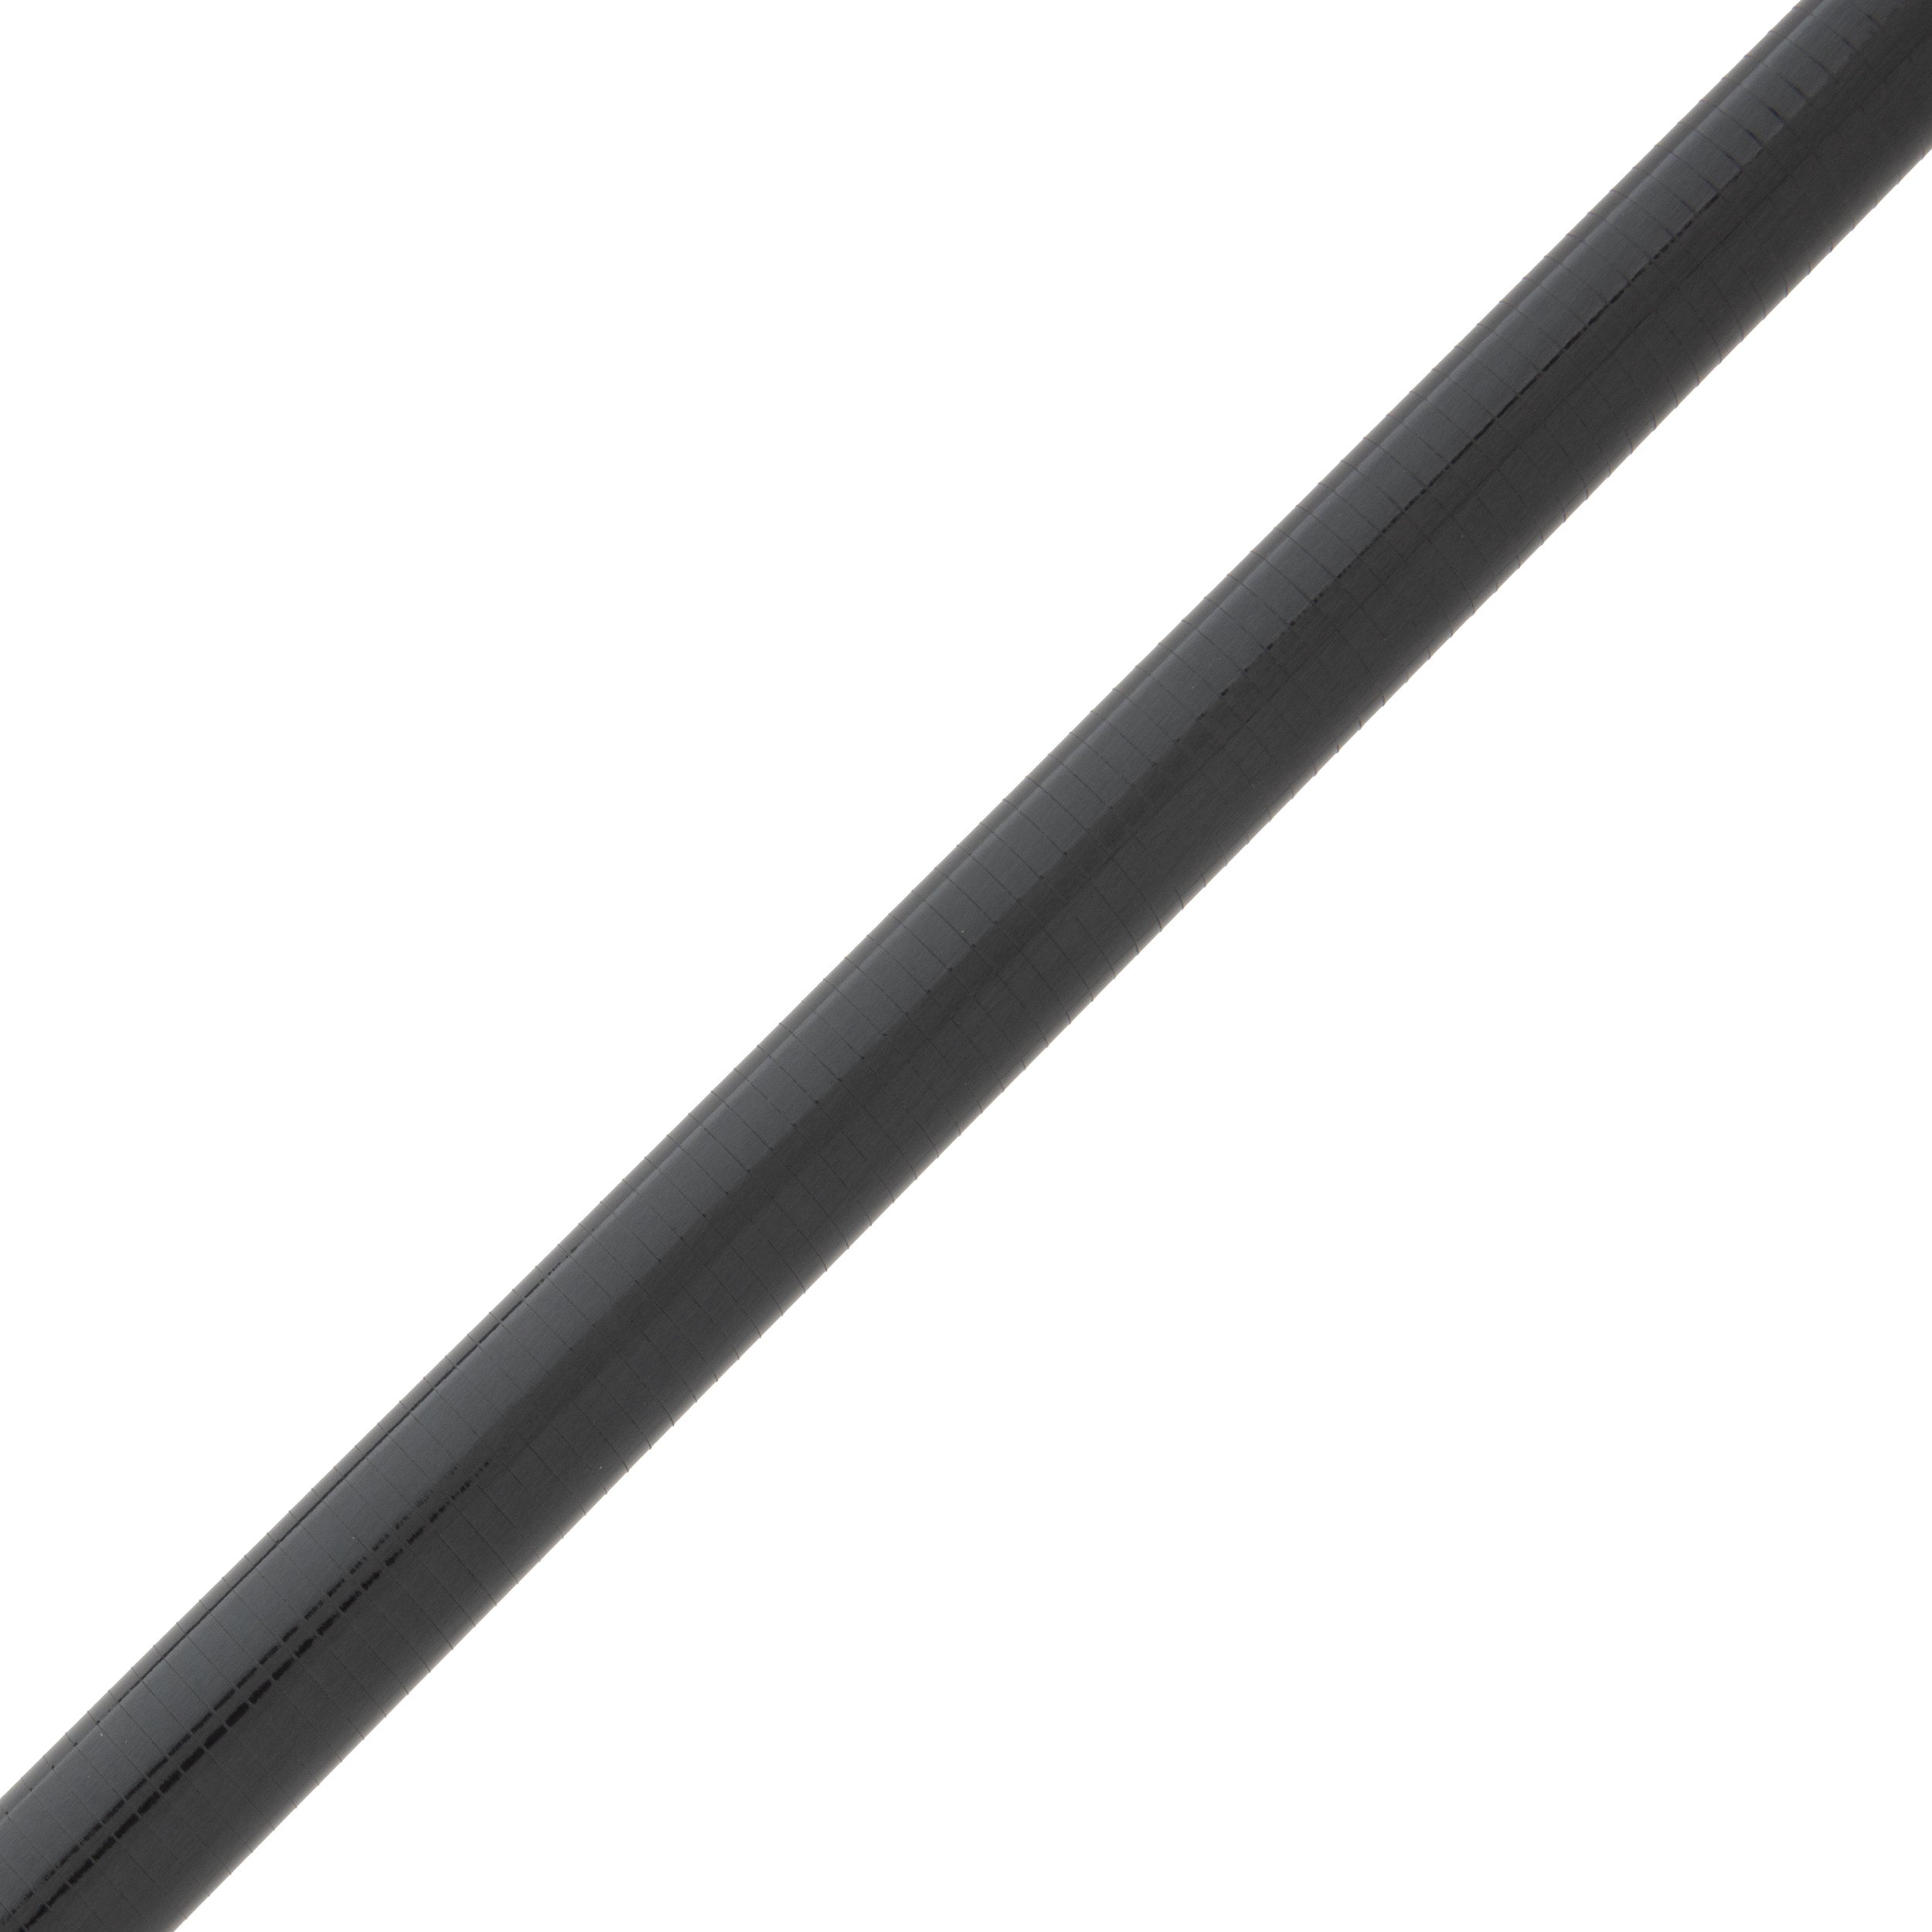 Cashion CR6r Carbon Fiber All-Purpose Rod Blank - CR6r-iFS904